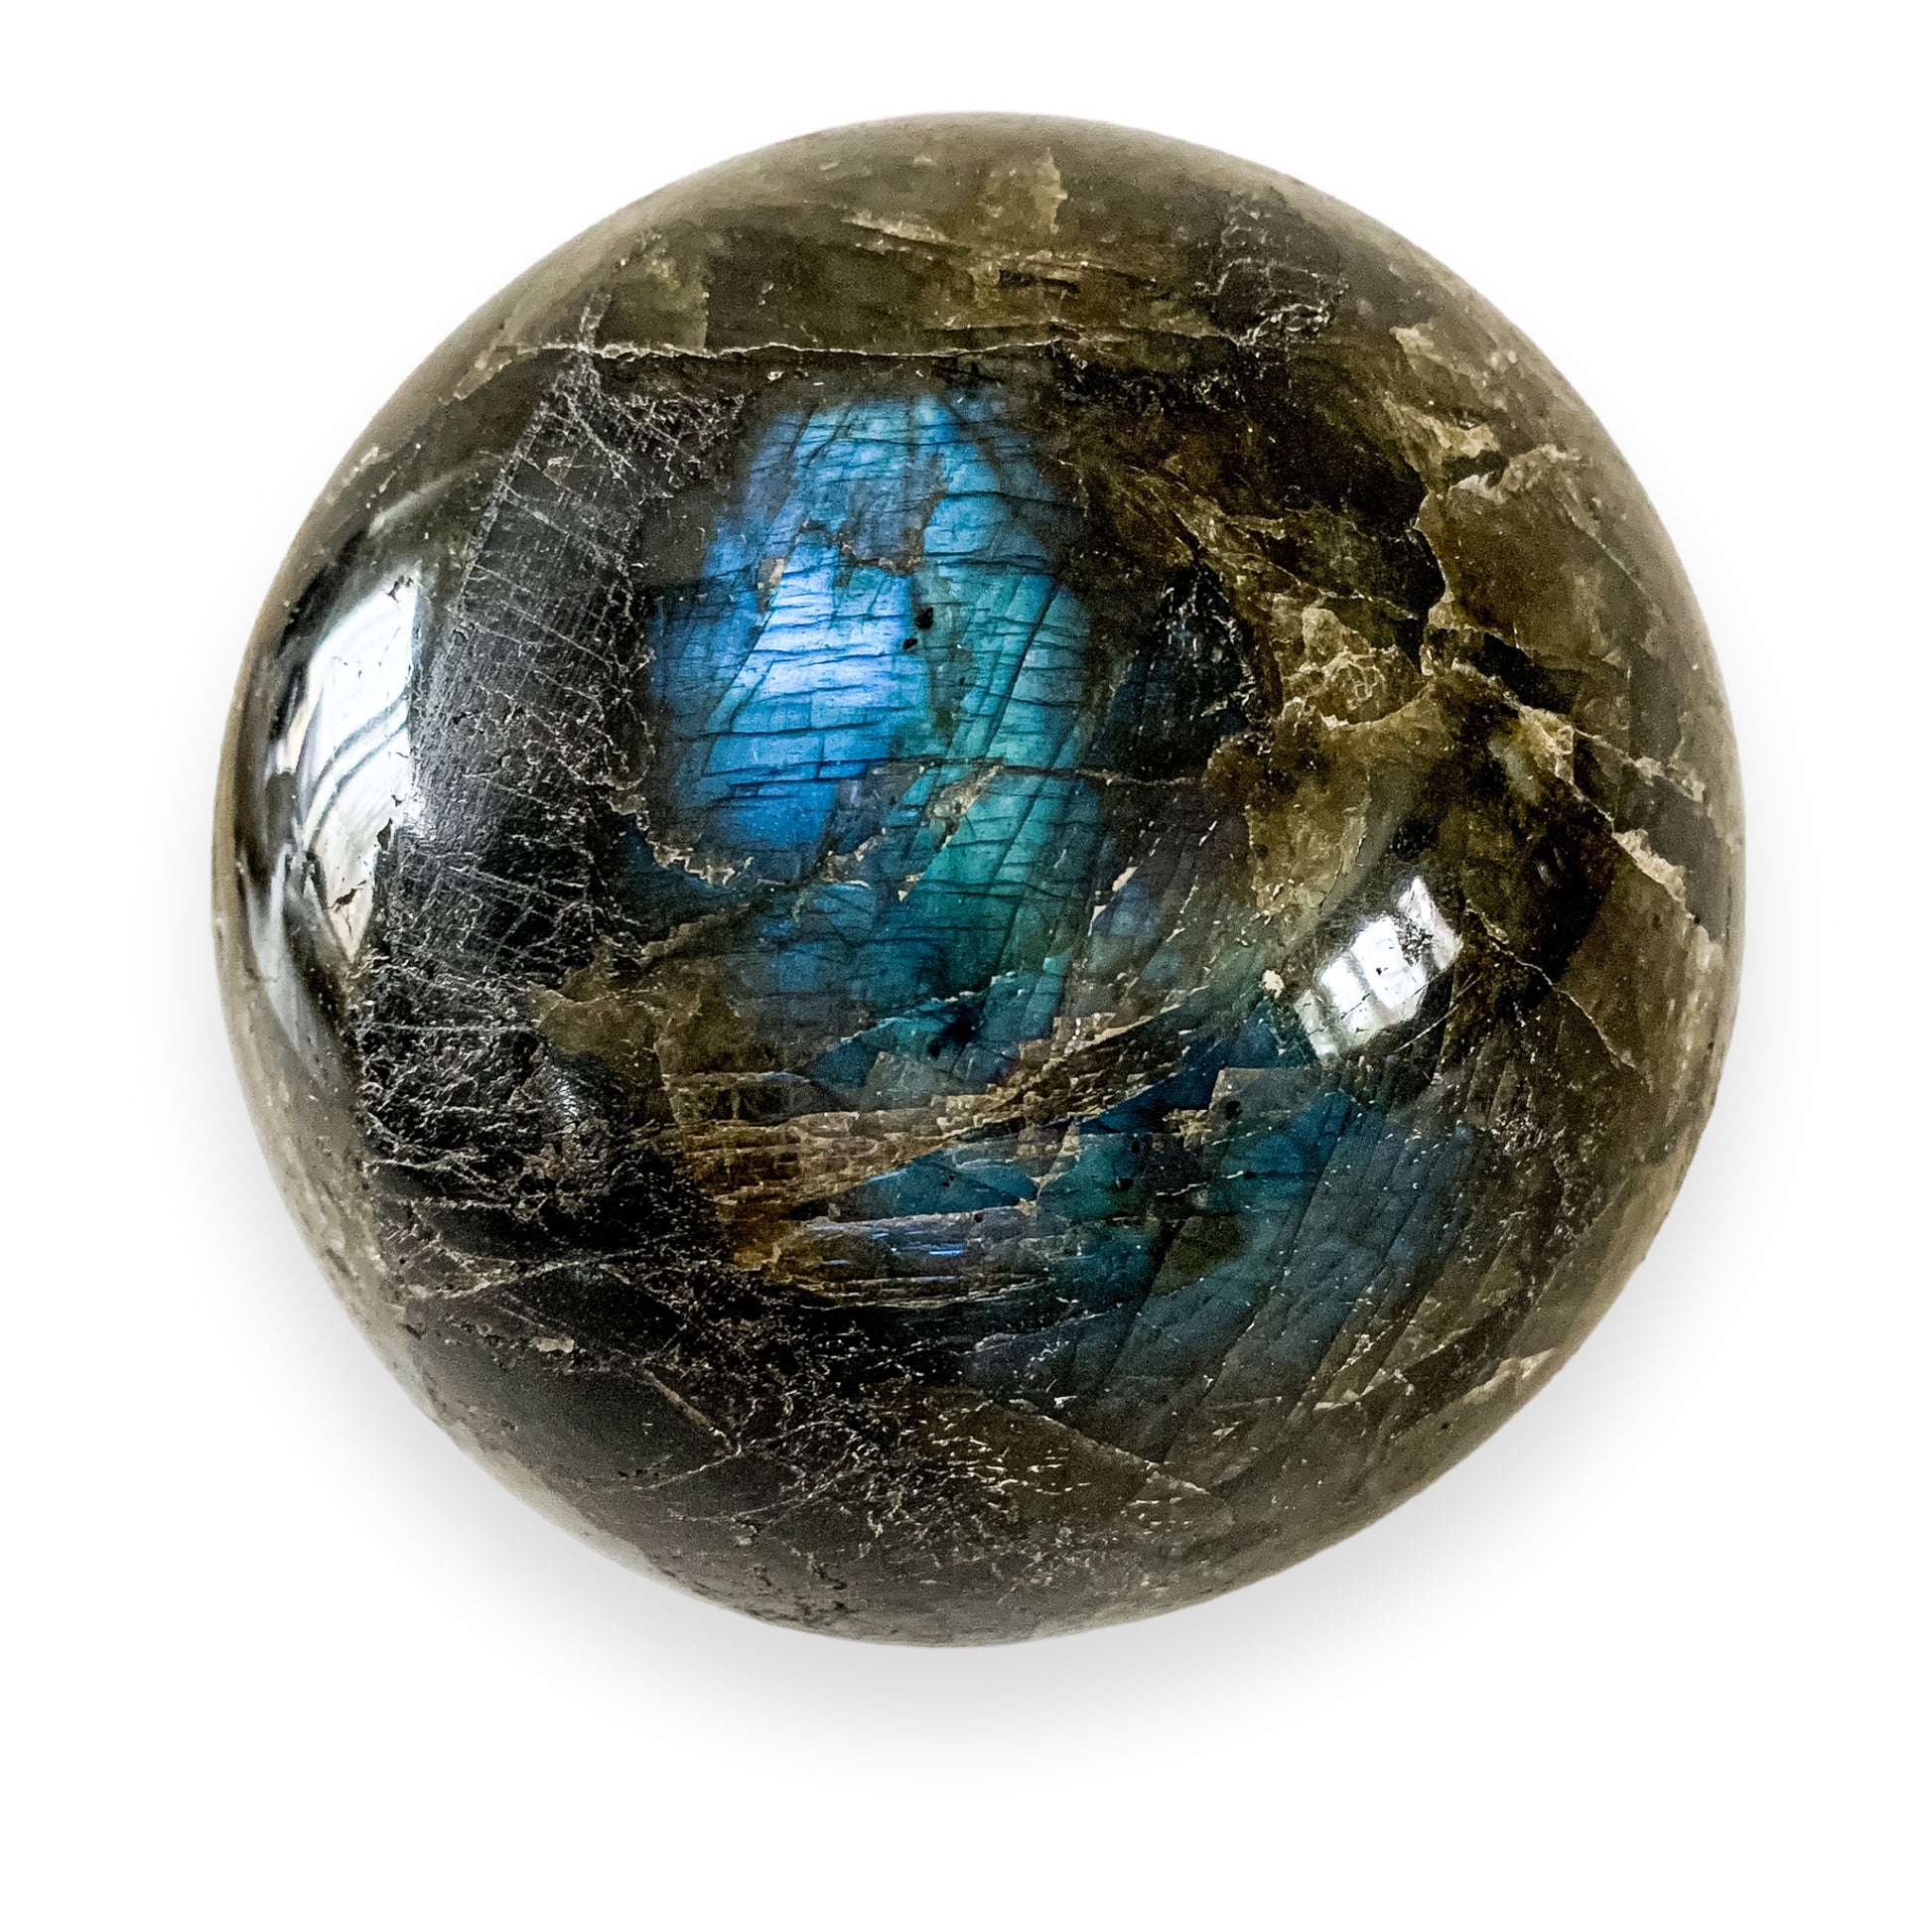 Labradorite crystal sphere on white background